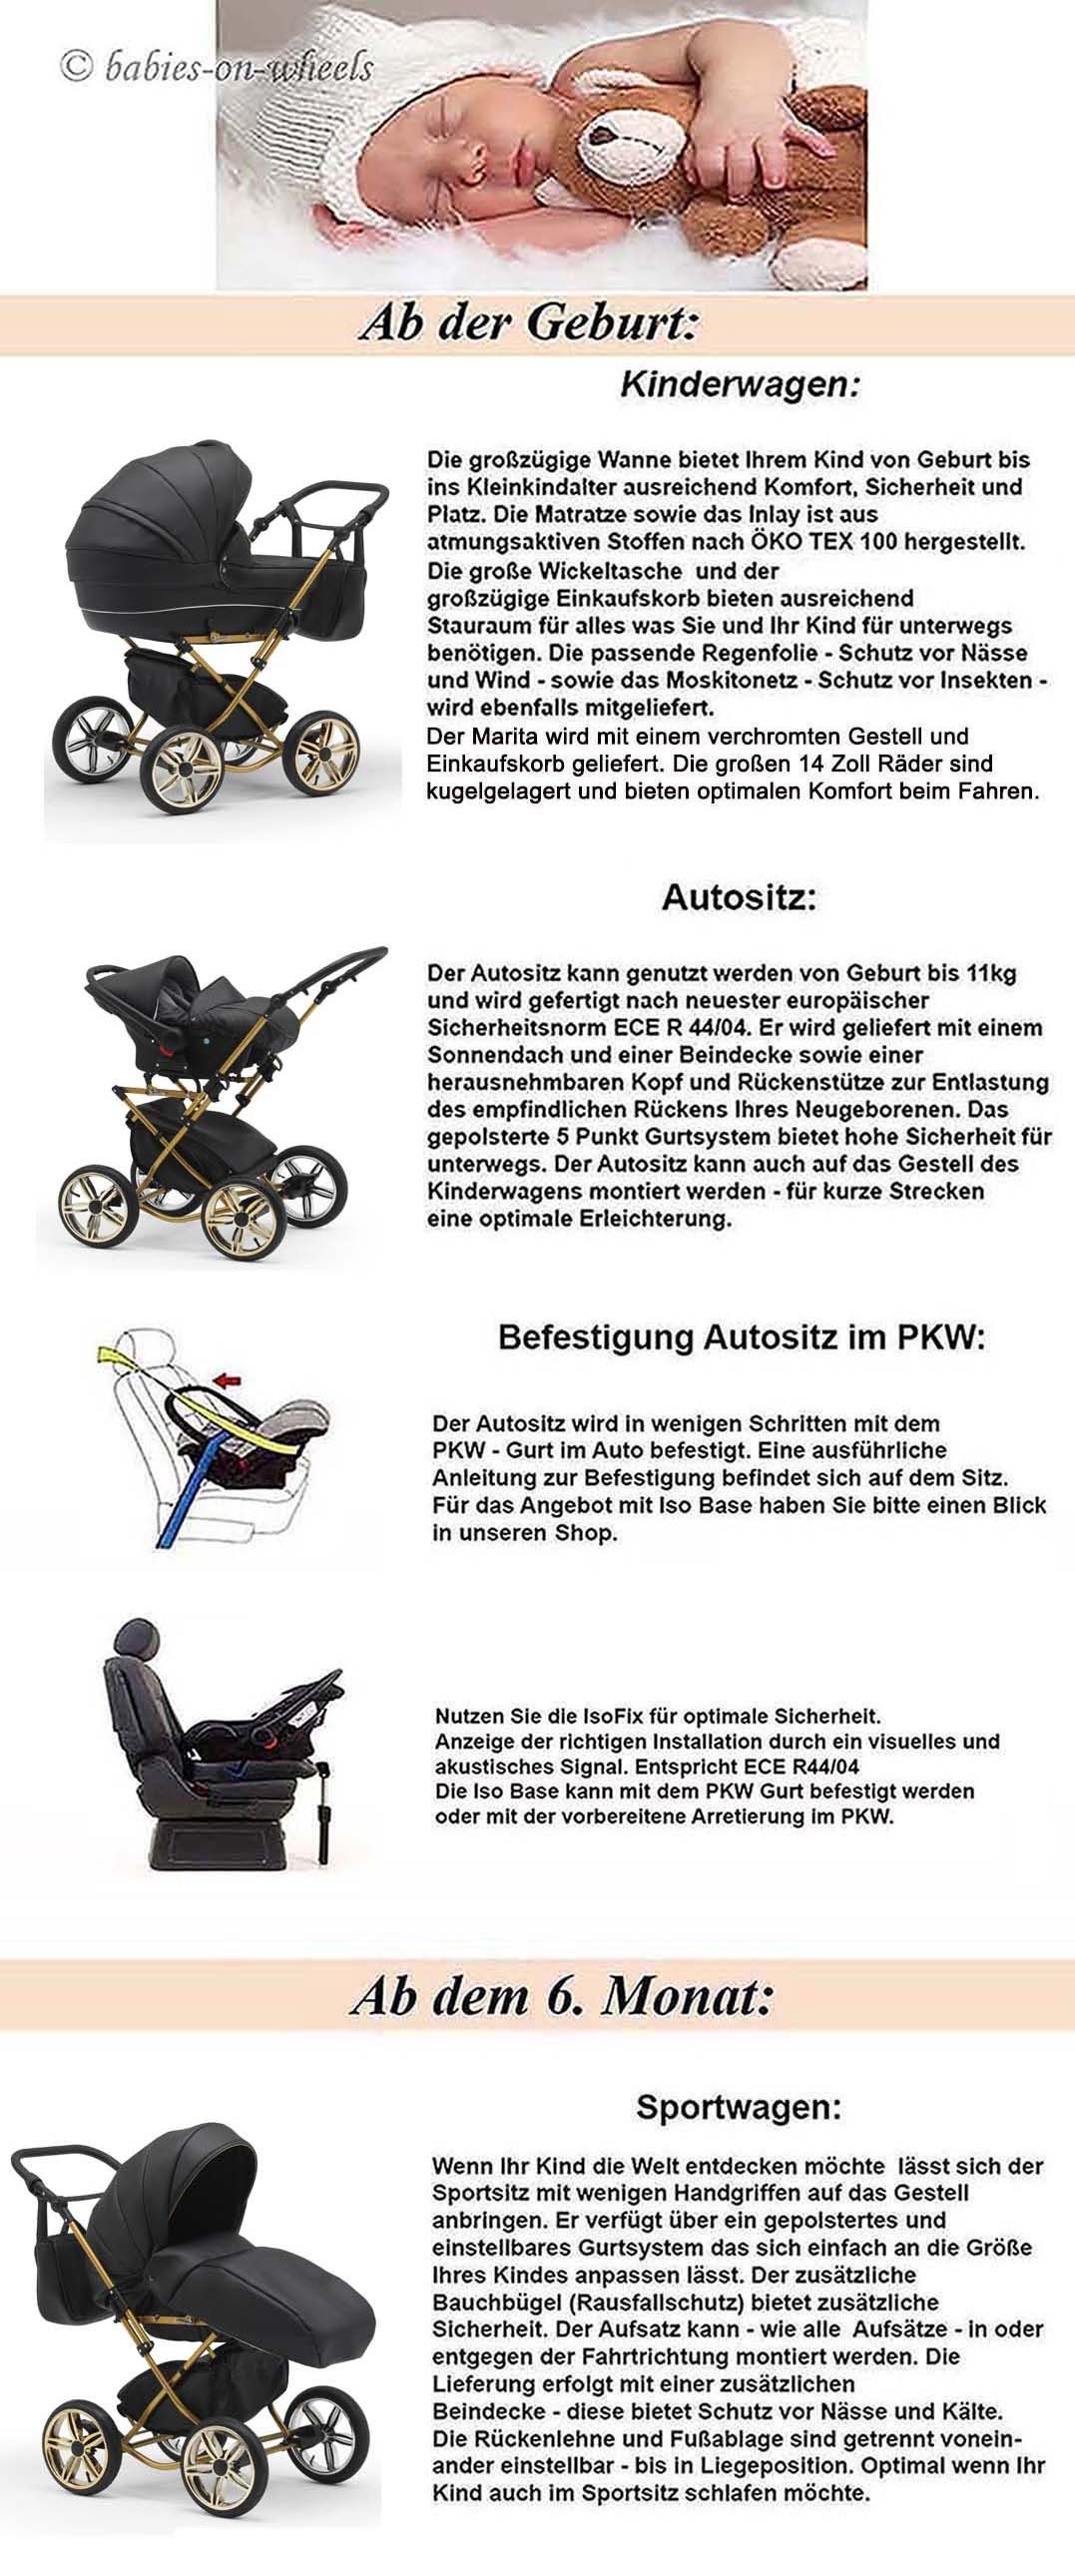 1 Sorento Teile - 14 4 Autositz Designs und Kombi-Kinderwagen 10 inkl. Iso - in Grau babies-on-wheels Base in